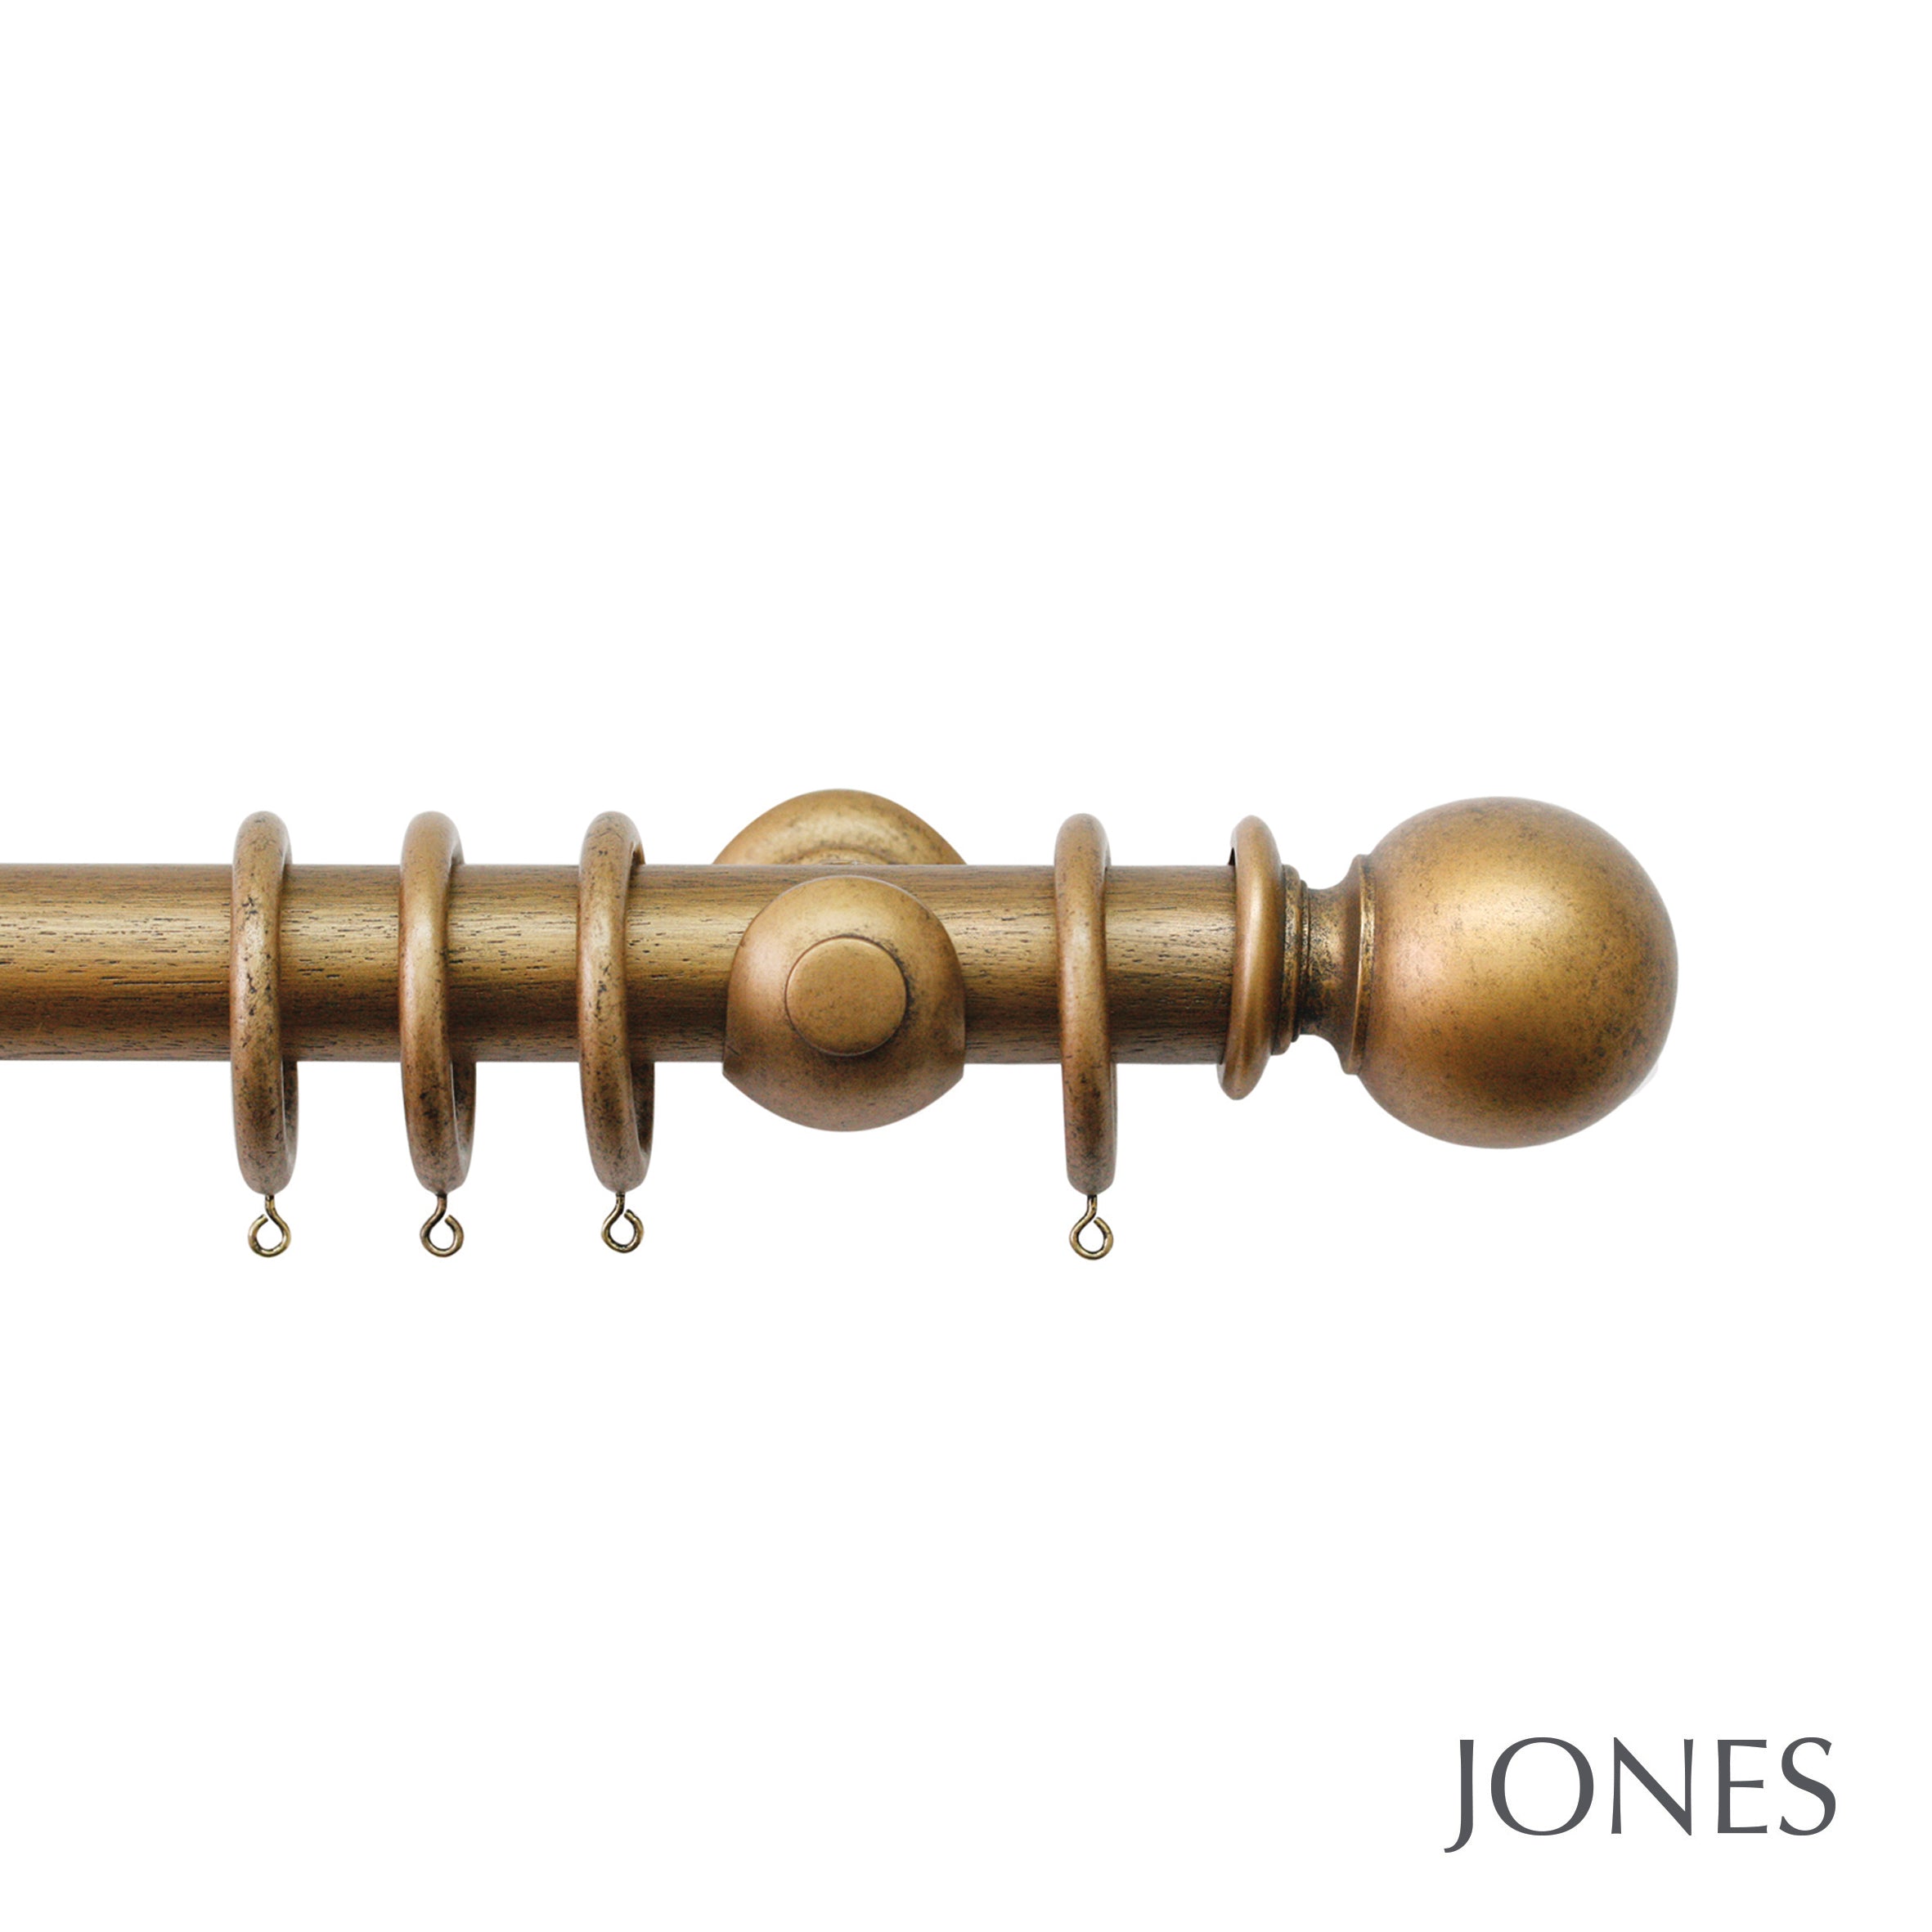 Jones Interiors Hardwick Ball Finial Curtain Pole Set in Antique Gold